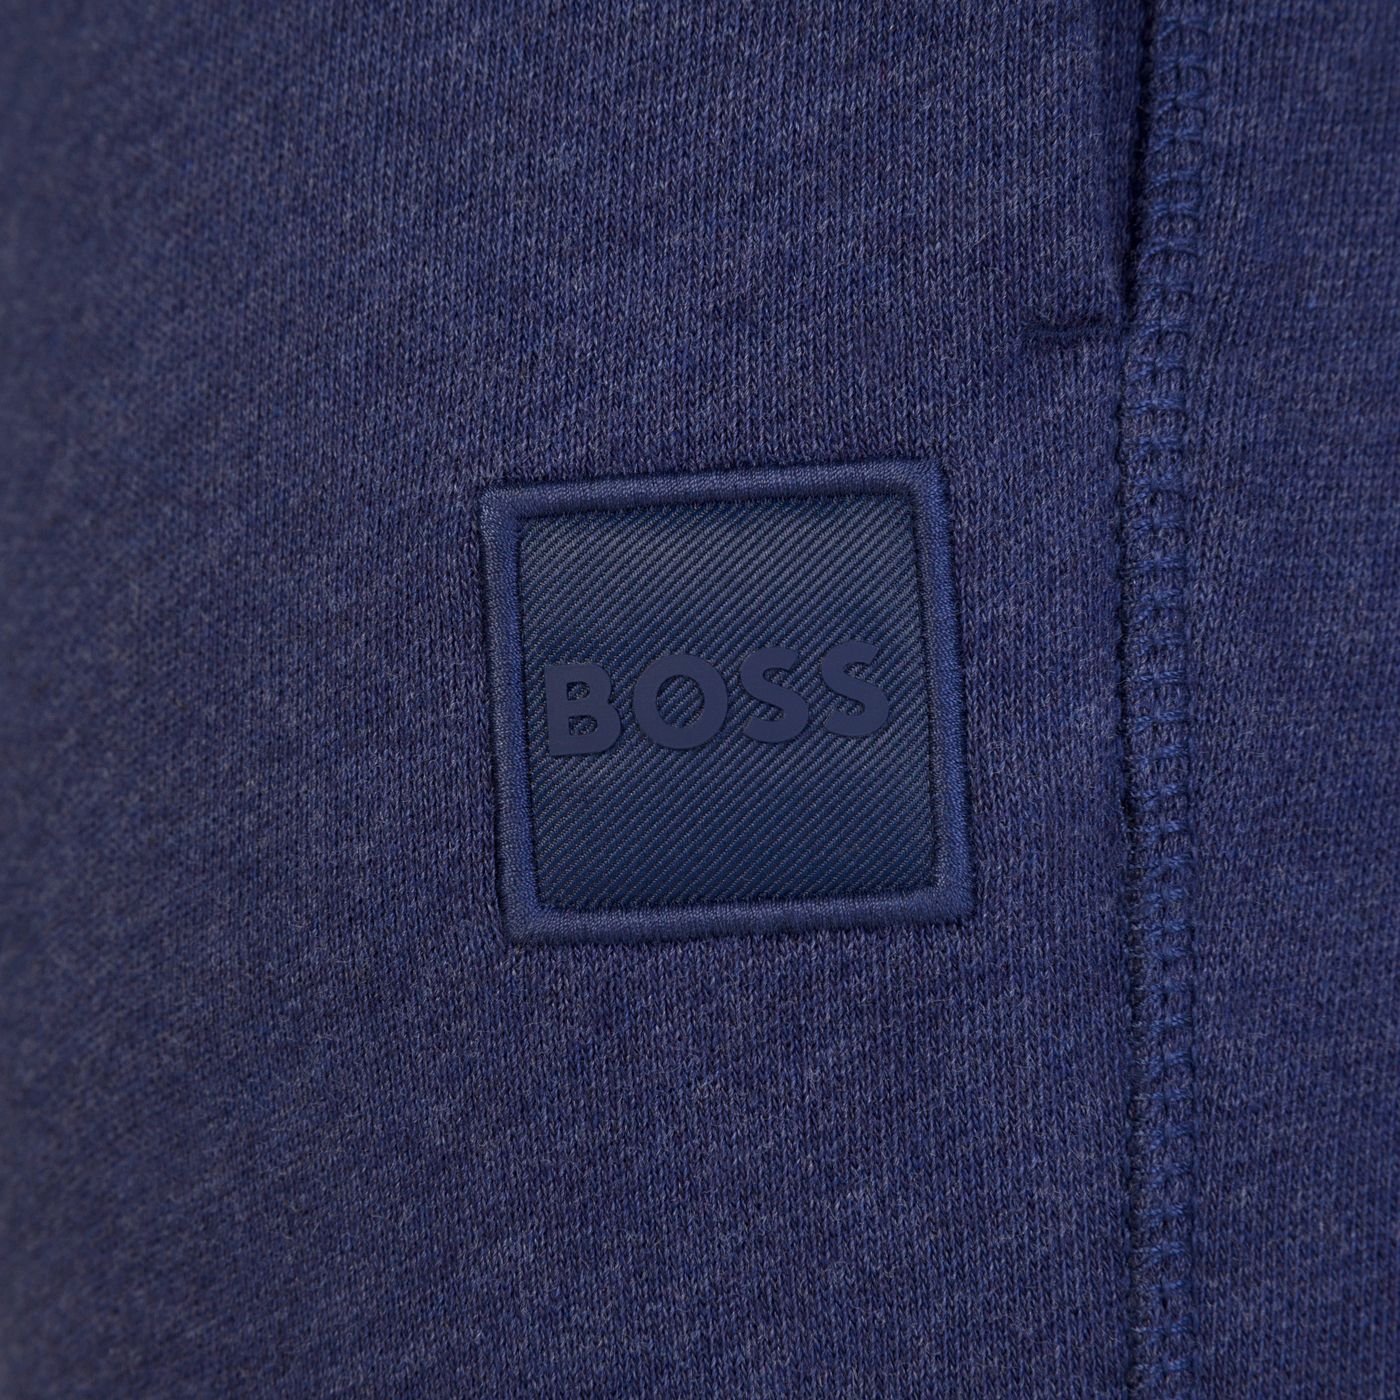 Boss Orange 50468448 Sestart Tracksuit Bottom - 418 Dark Blue - Escape Menswear